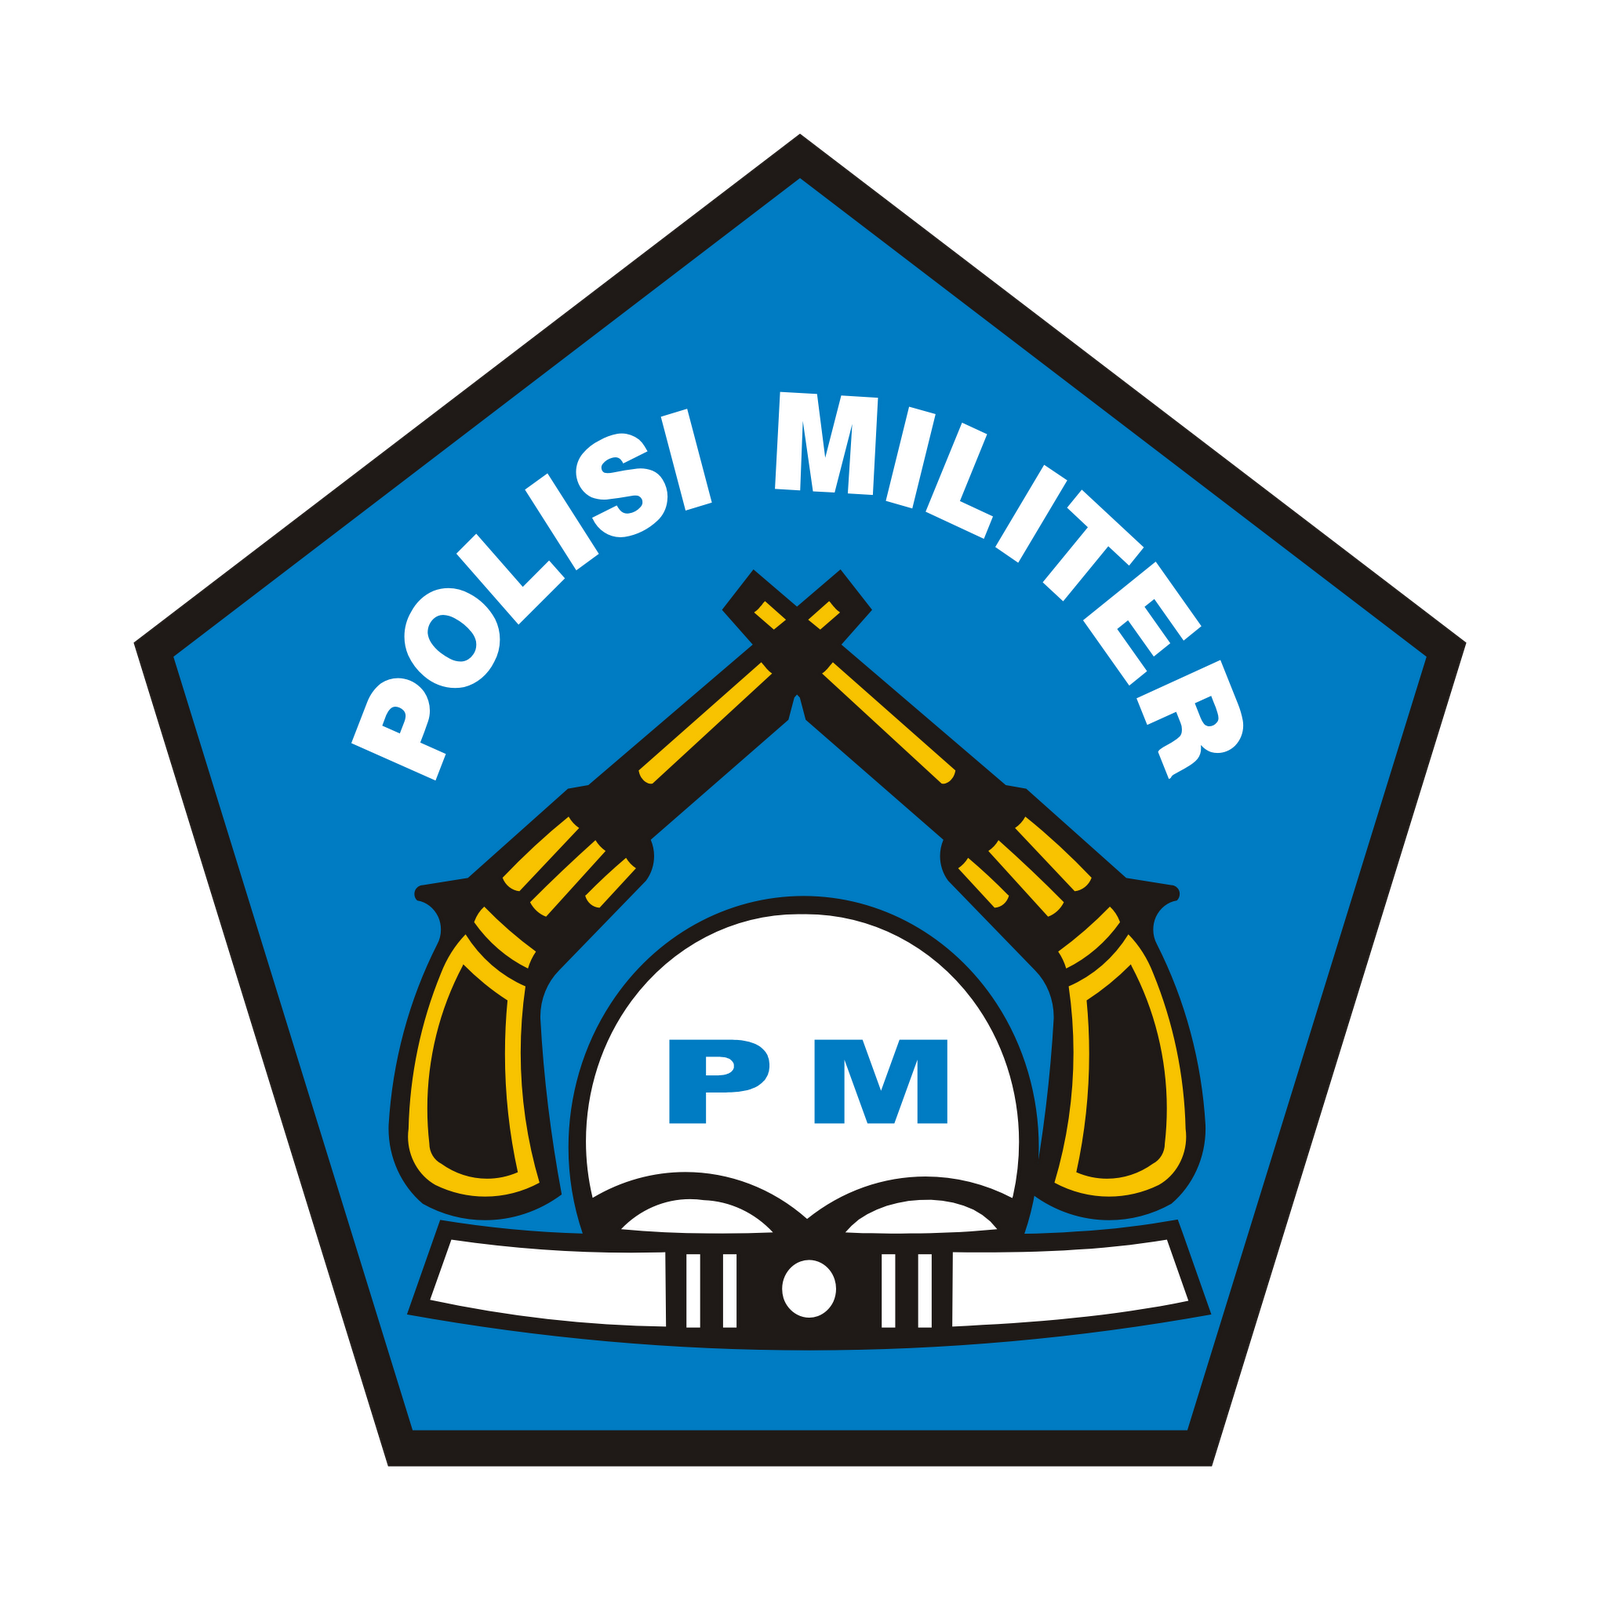  Logo Polisi Militer PM Tentara Nasional Indonesia 